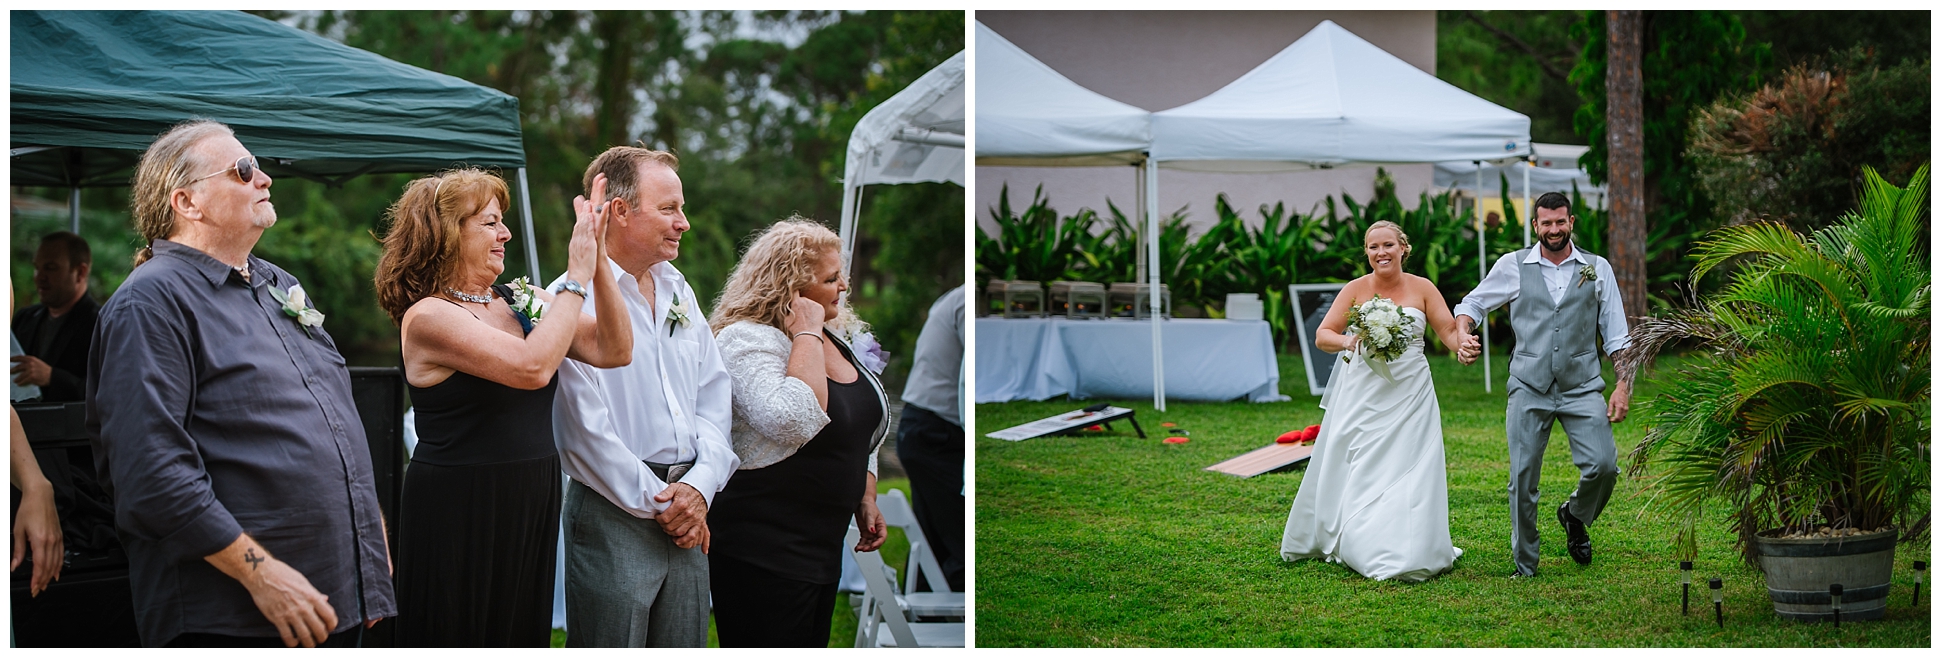 Florida-wedding-photograhy-backyard_0051.jpg